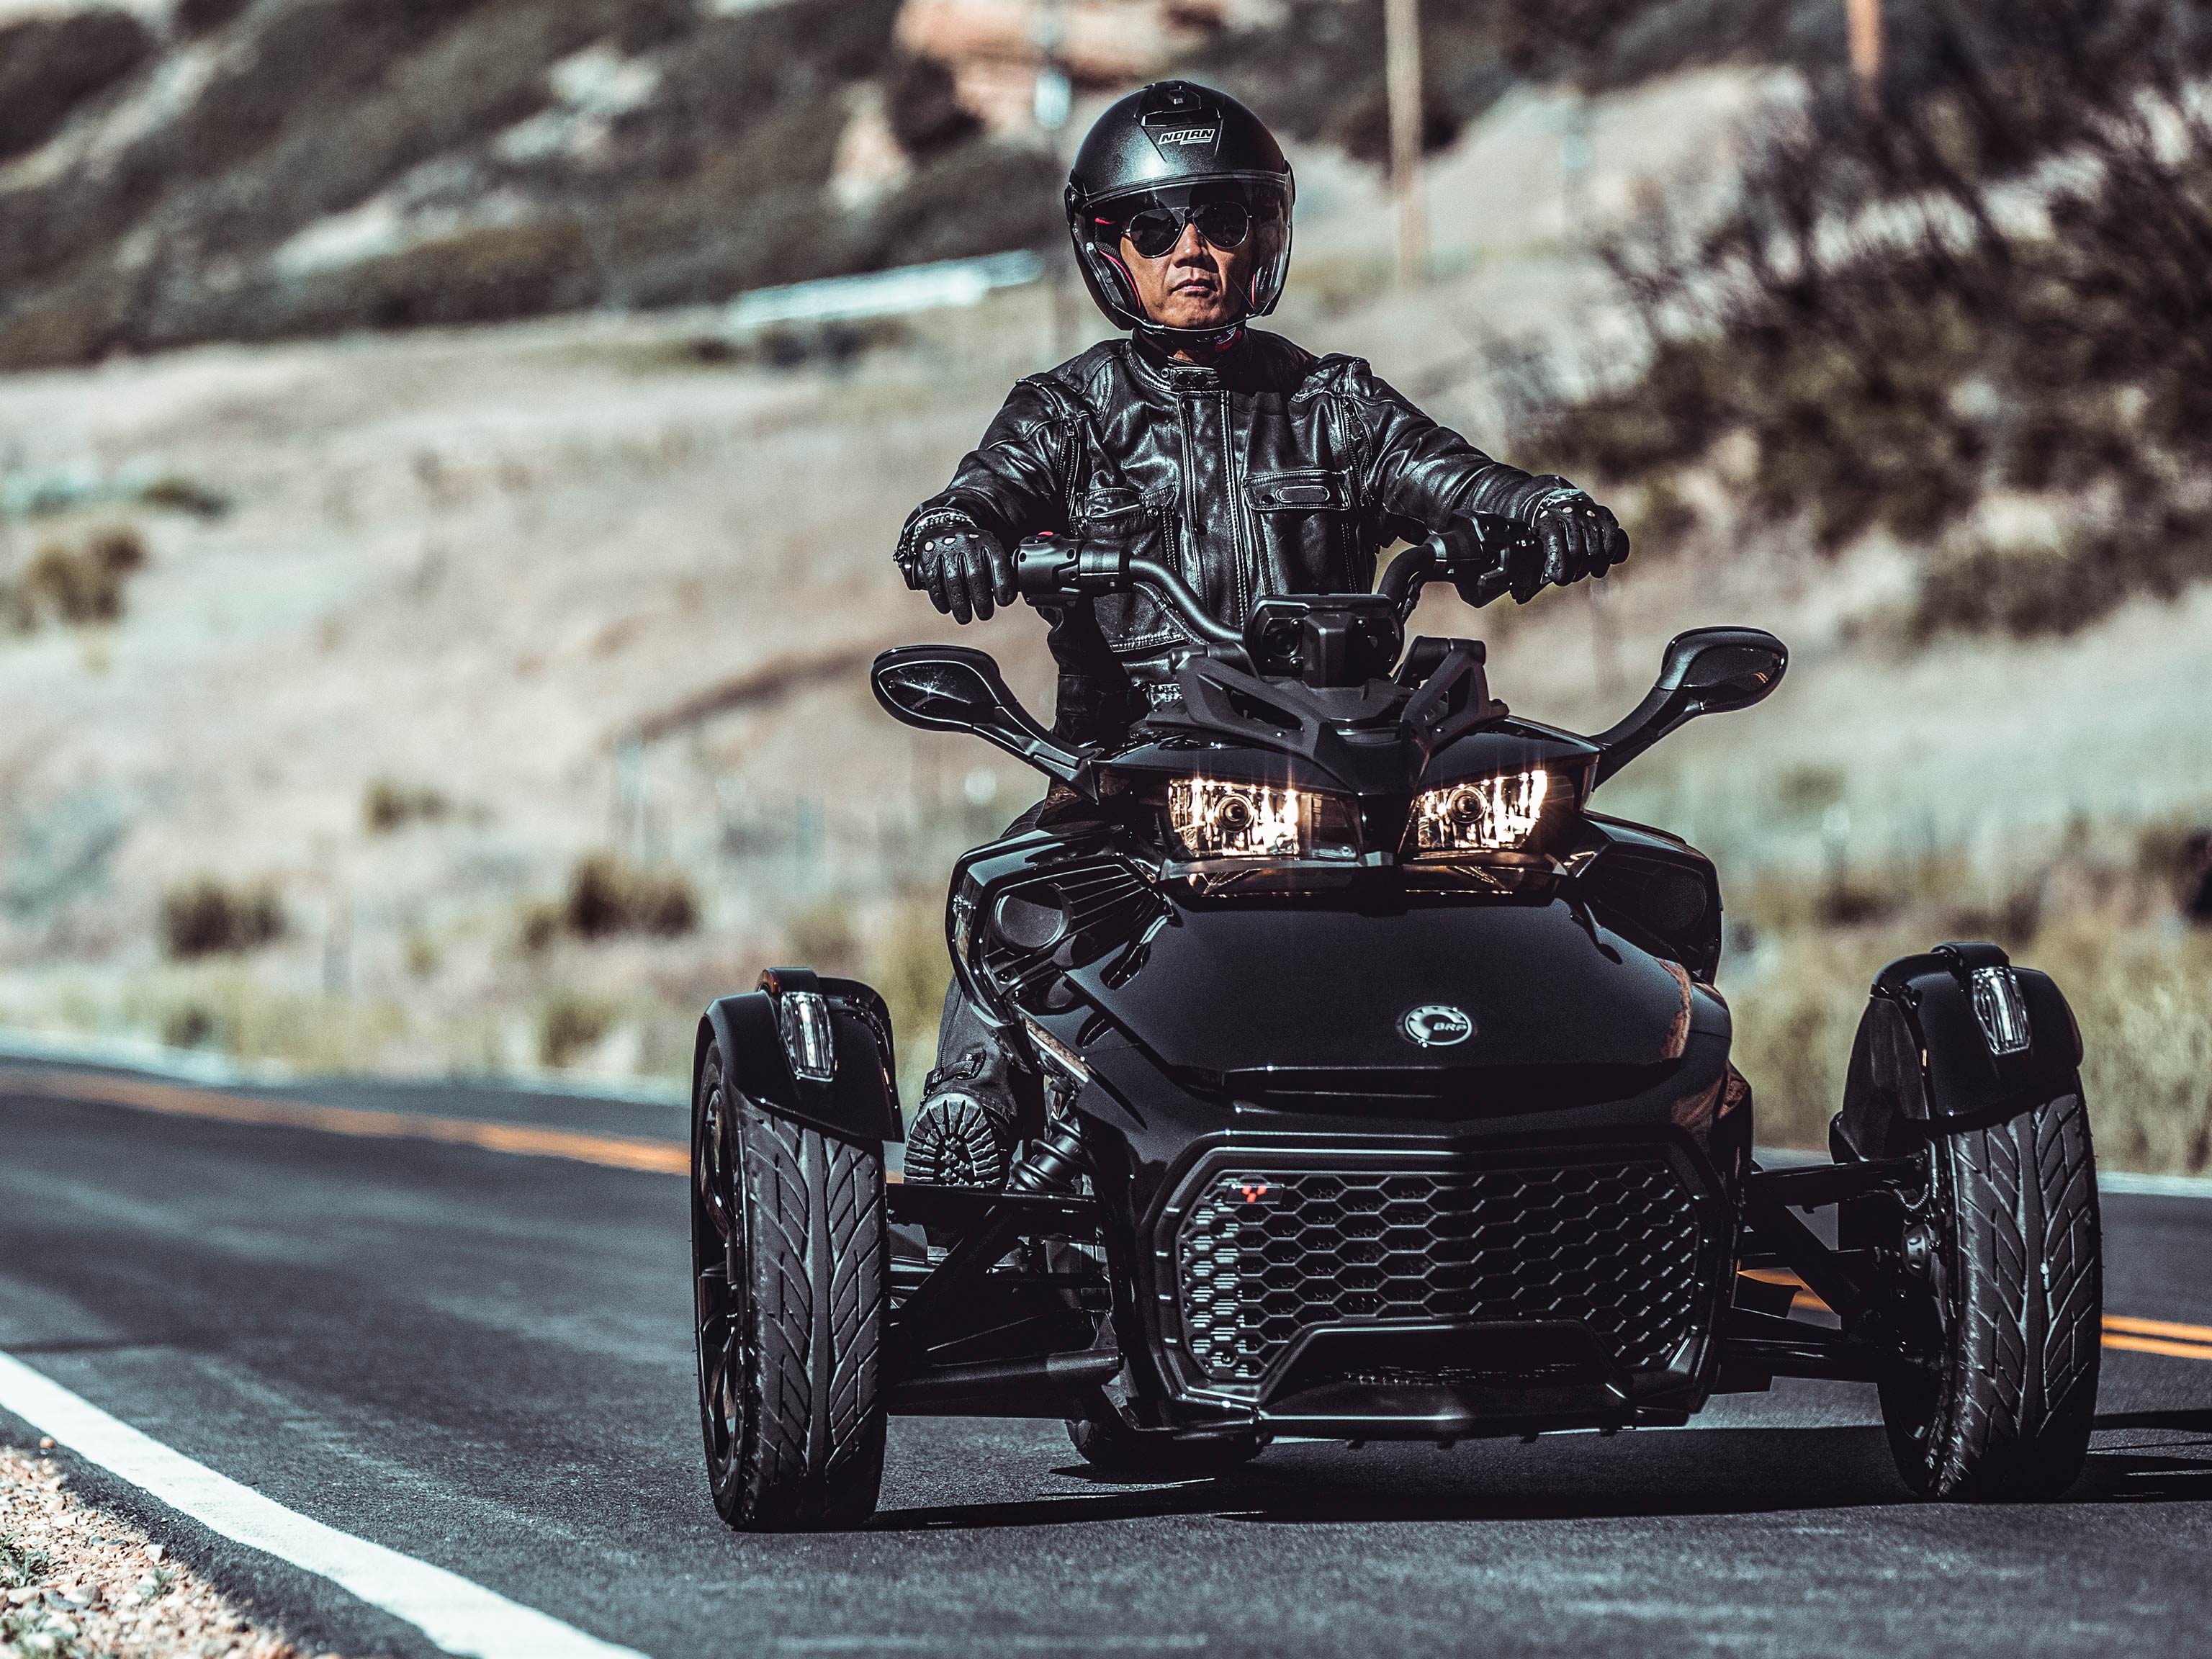 Egy férfi utazik Can-Am Spyder motorral a sivatagi úton